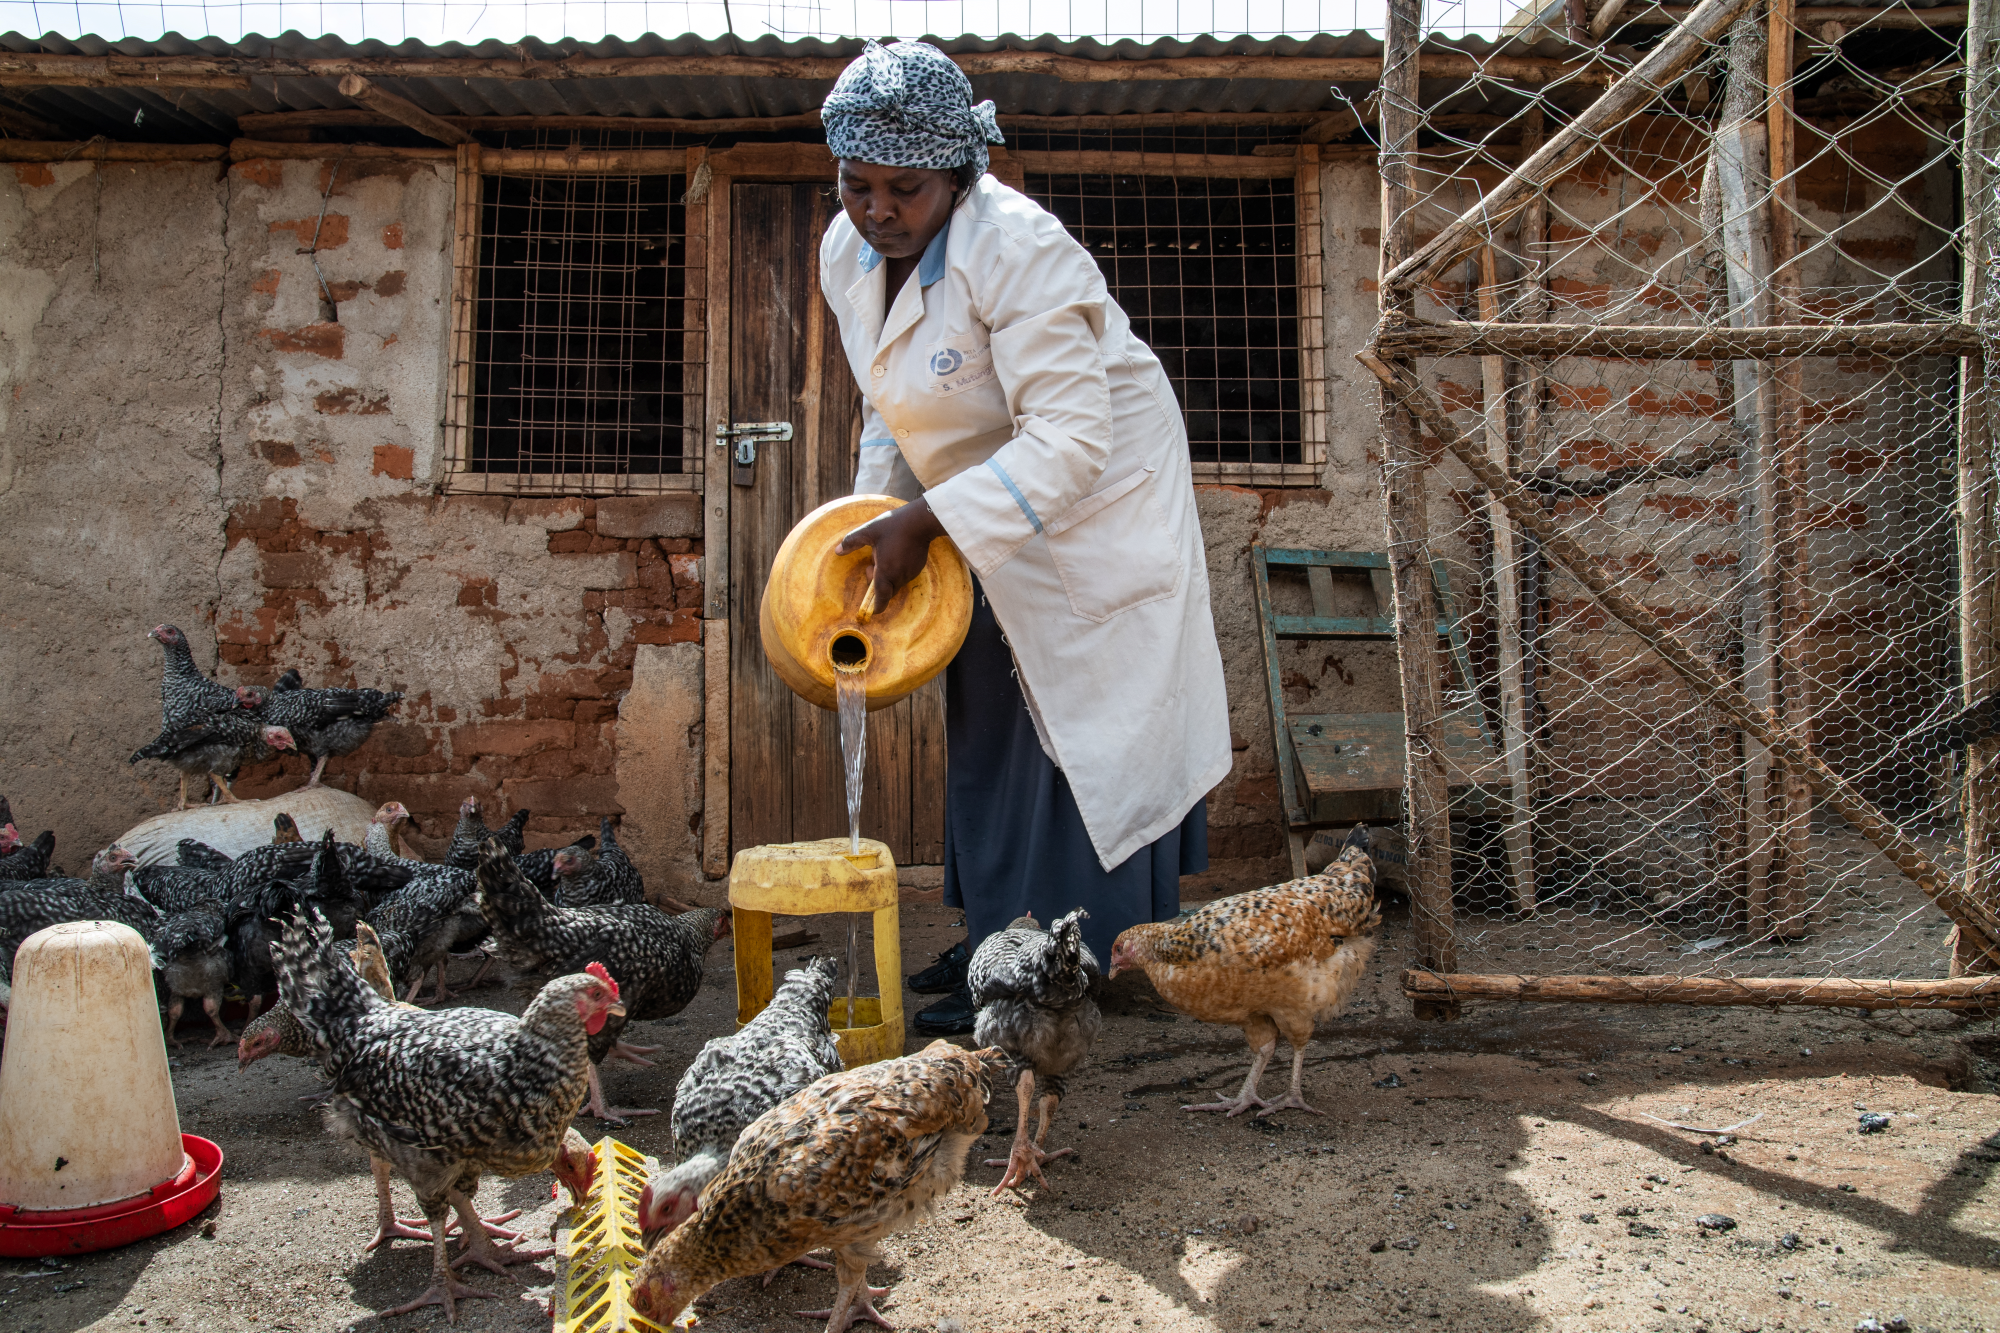 Josephine Kimonyi, farmer, with her chickens in Makueni County, Kenya on November 13, 2022.